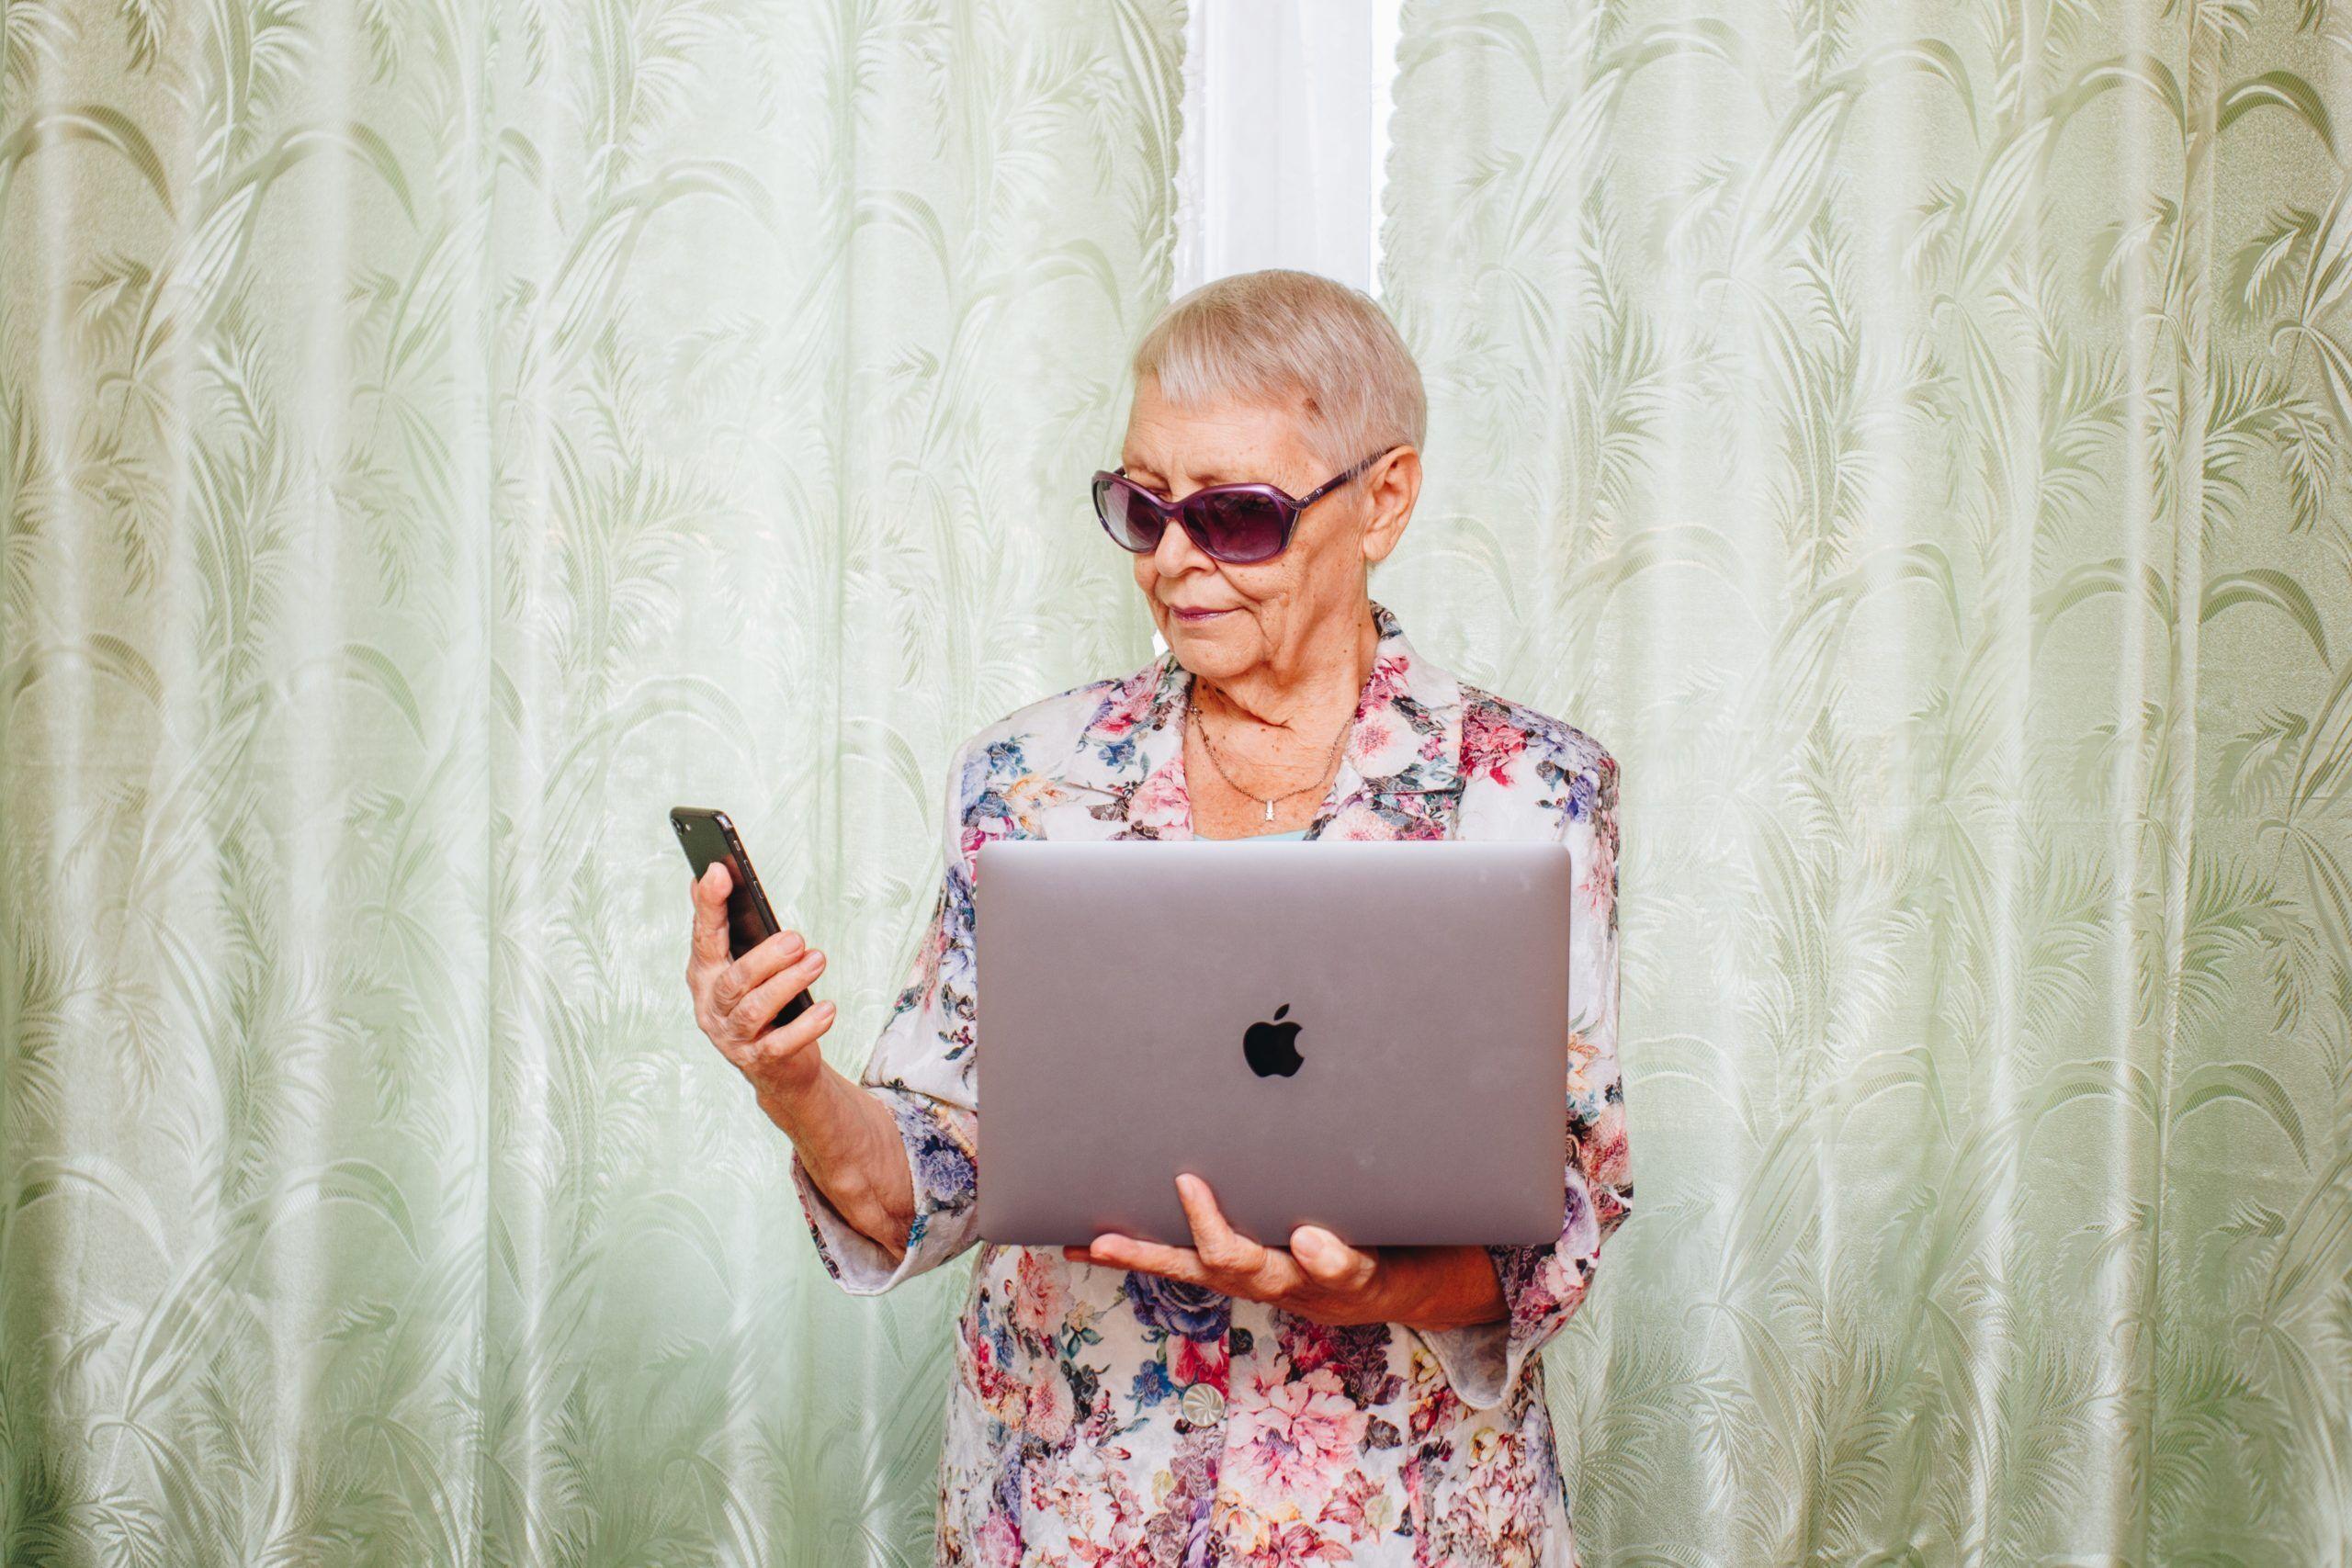 Лучший интернет в краснодаре. Бабушка и интернет. Бабушка из интернета. Бабка интернет.